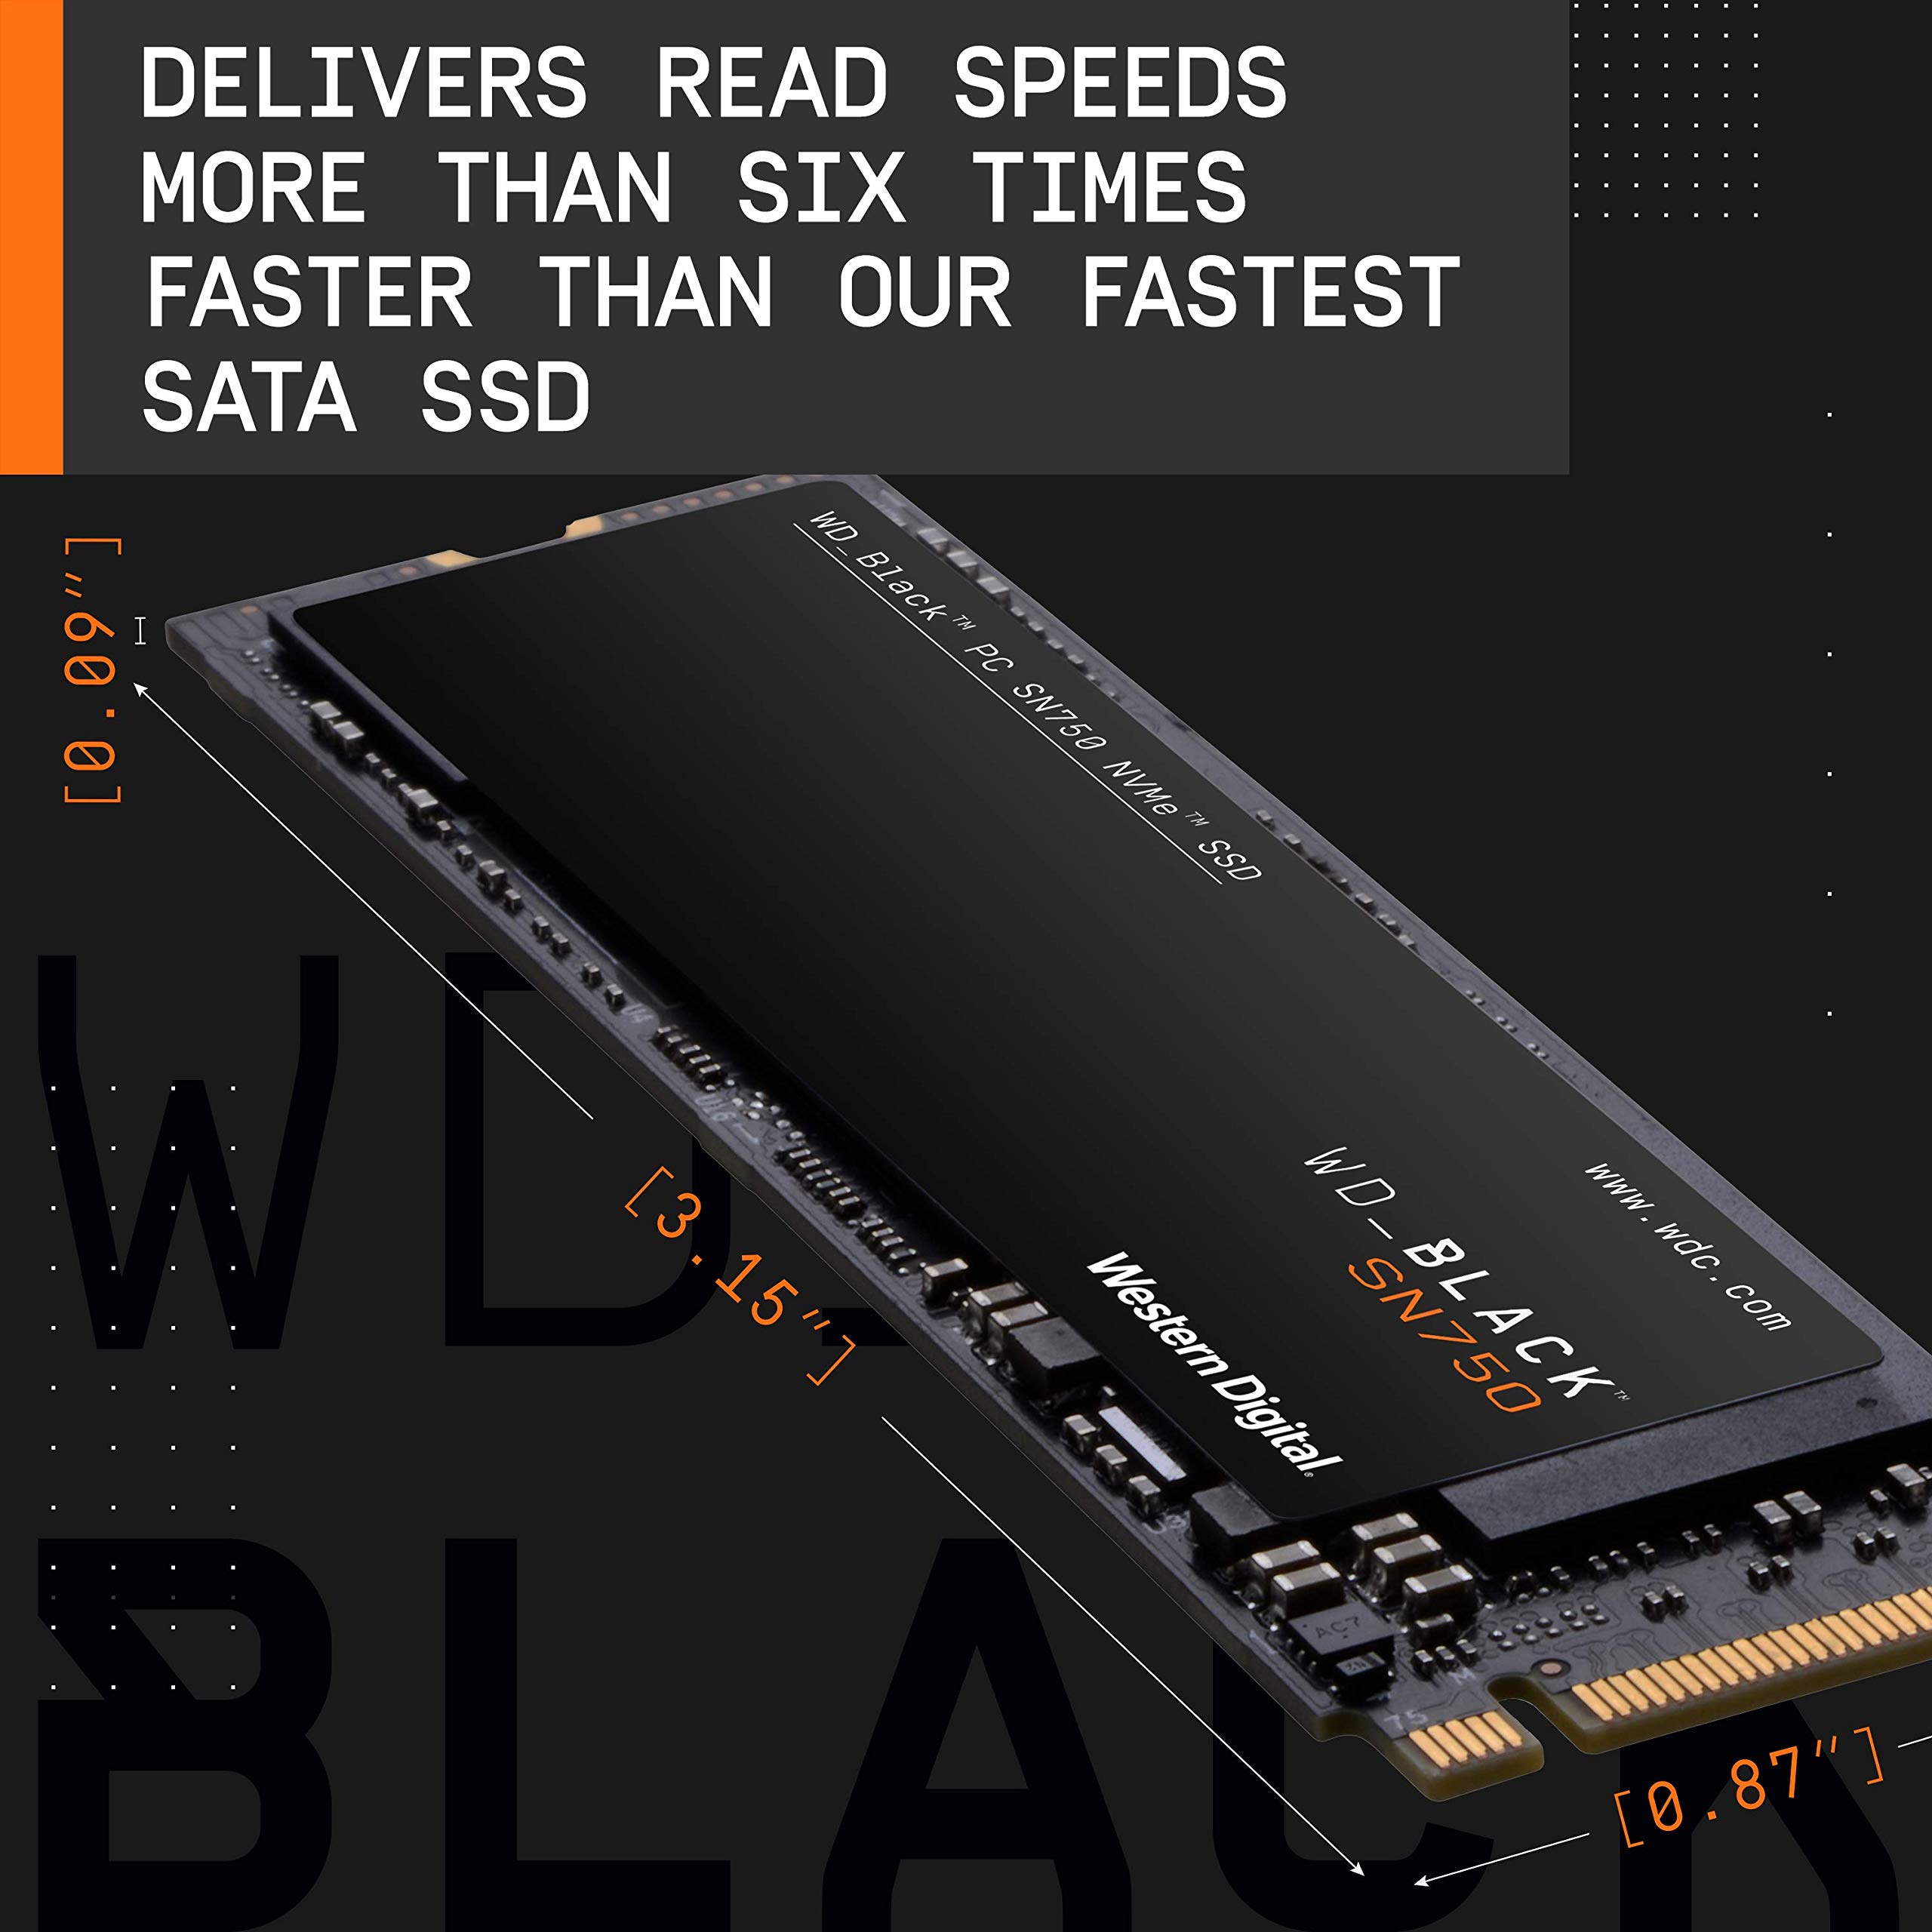 WD_BLACK 1TB SN750 NVMe Internal Gaming SSD Solid State Drive - Gen3 PCIe, M.2 2280, 3D NAND, Up to 3,470 MB/s - WDS100T3X0C